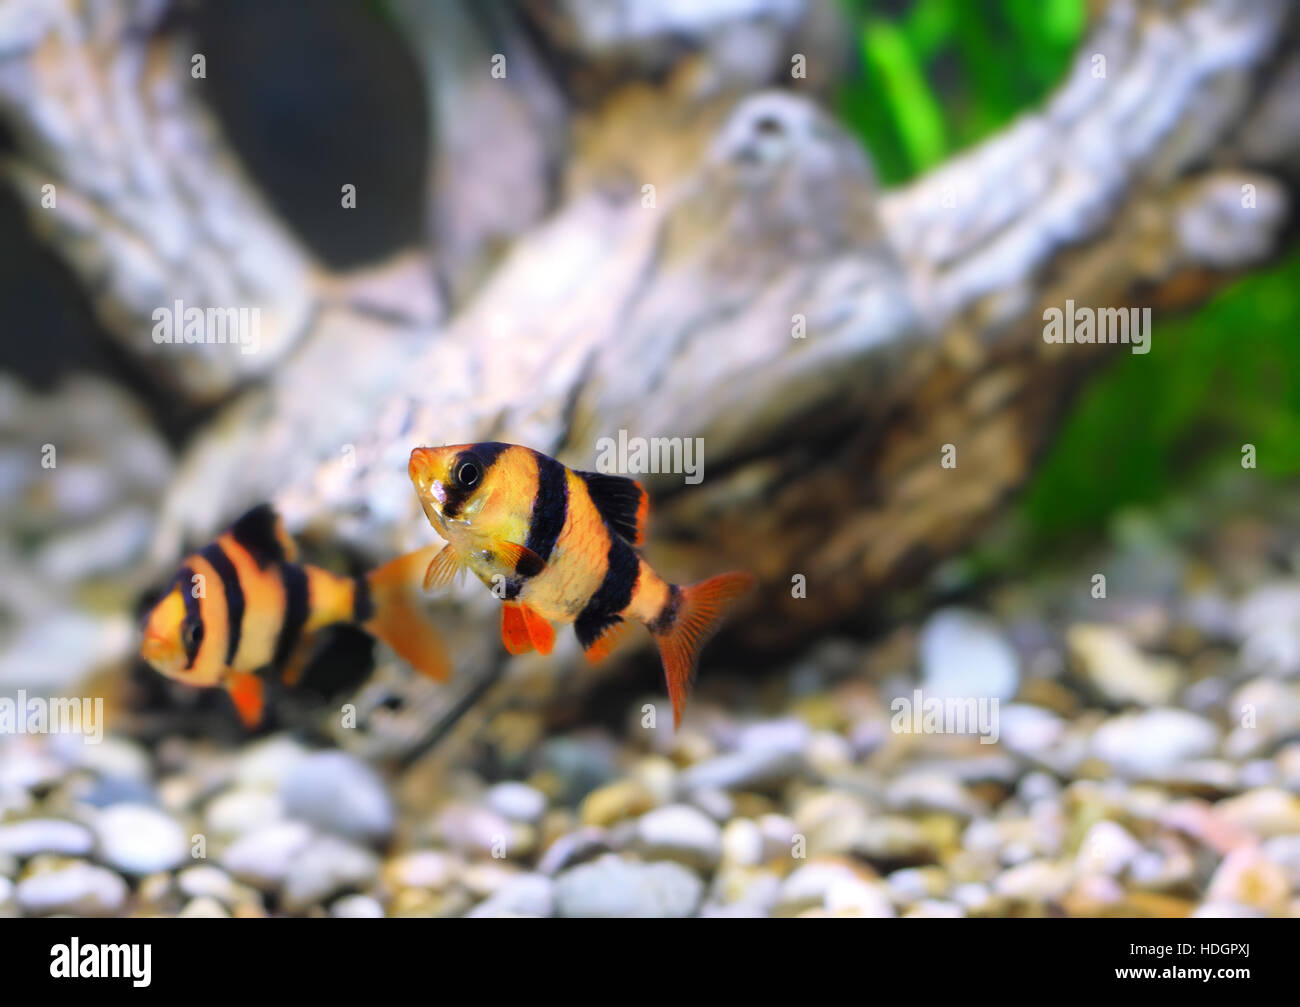 Shoal of aquarium fish-Barbus-five-banded barb. (Barbus pentazona) Stock Photo